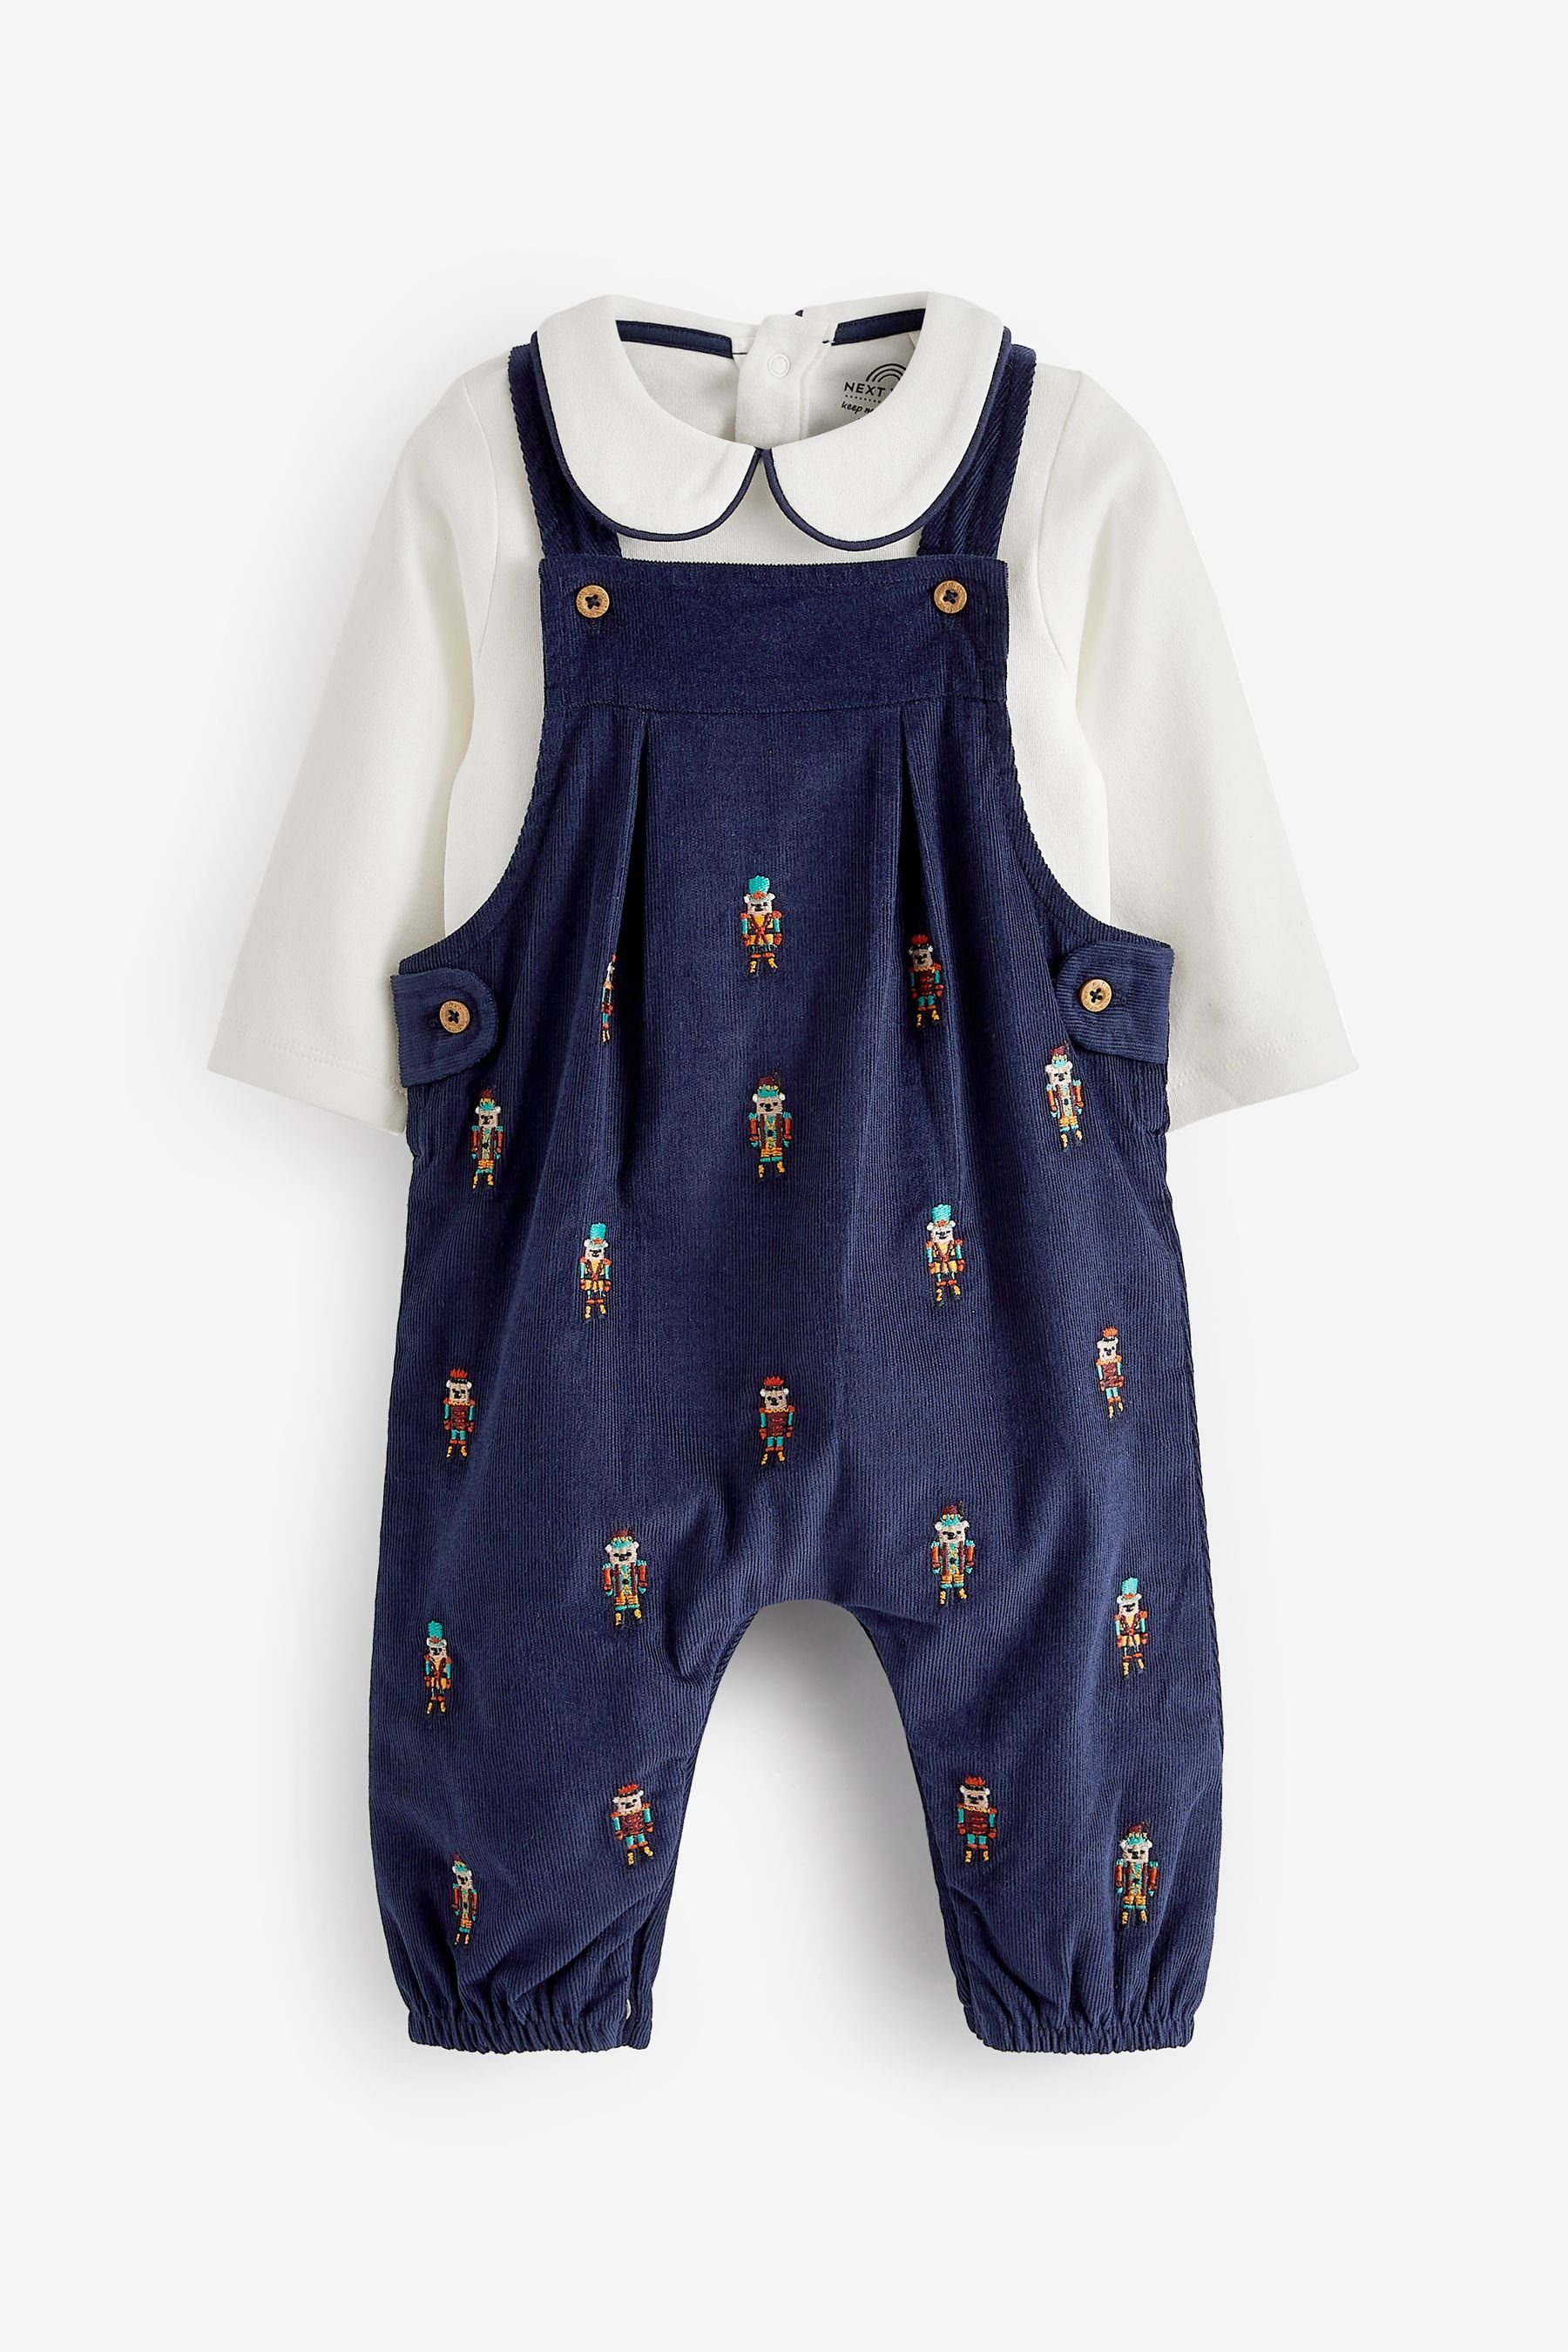 Next Latzhose Baby-Latzhose und Body Set Embroidery Schicke (2-tlg) Navy Bear 2-teiligen im